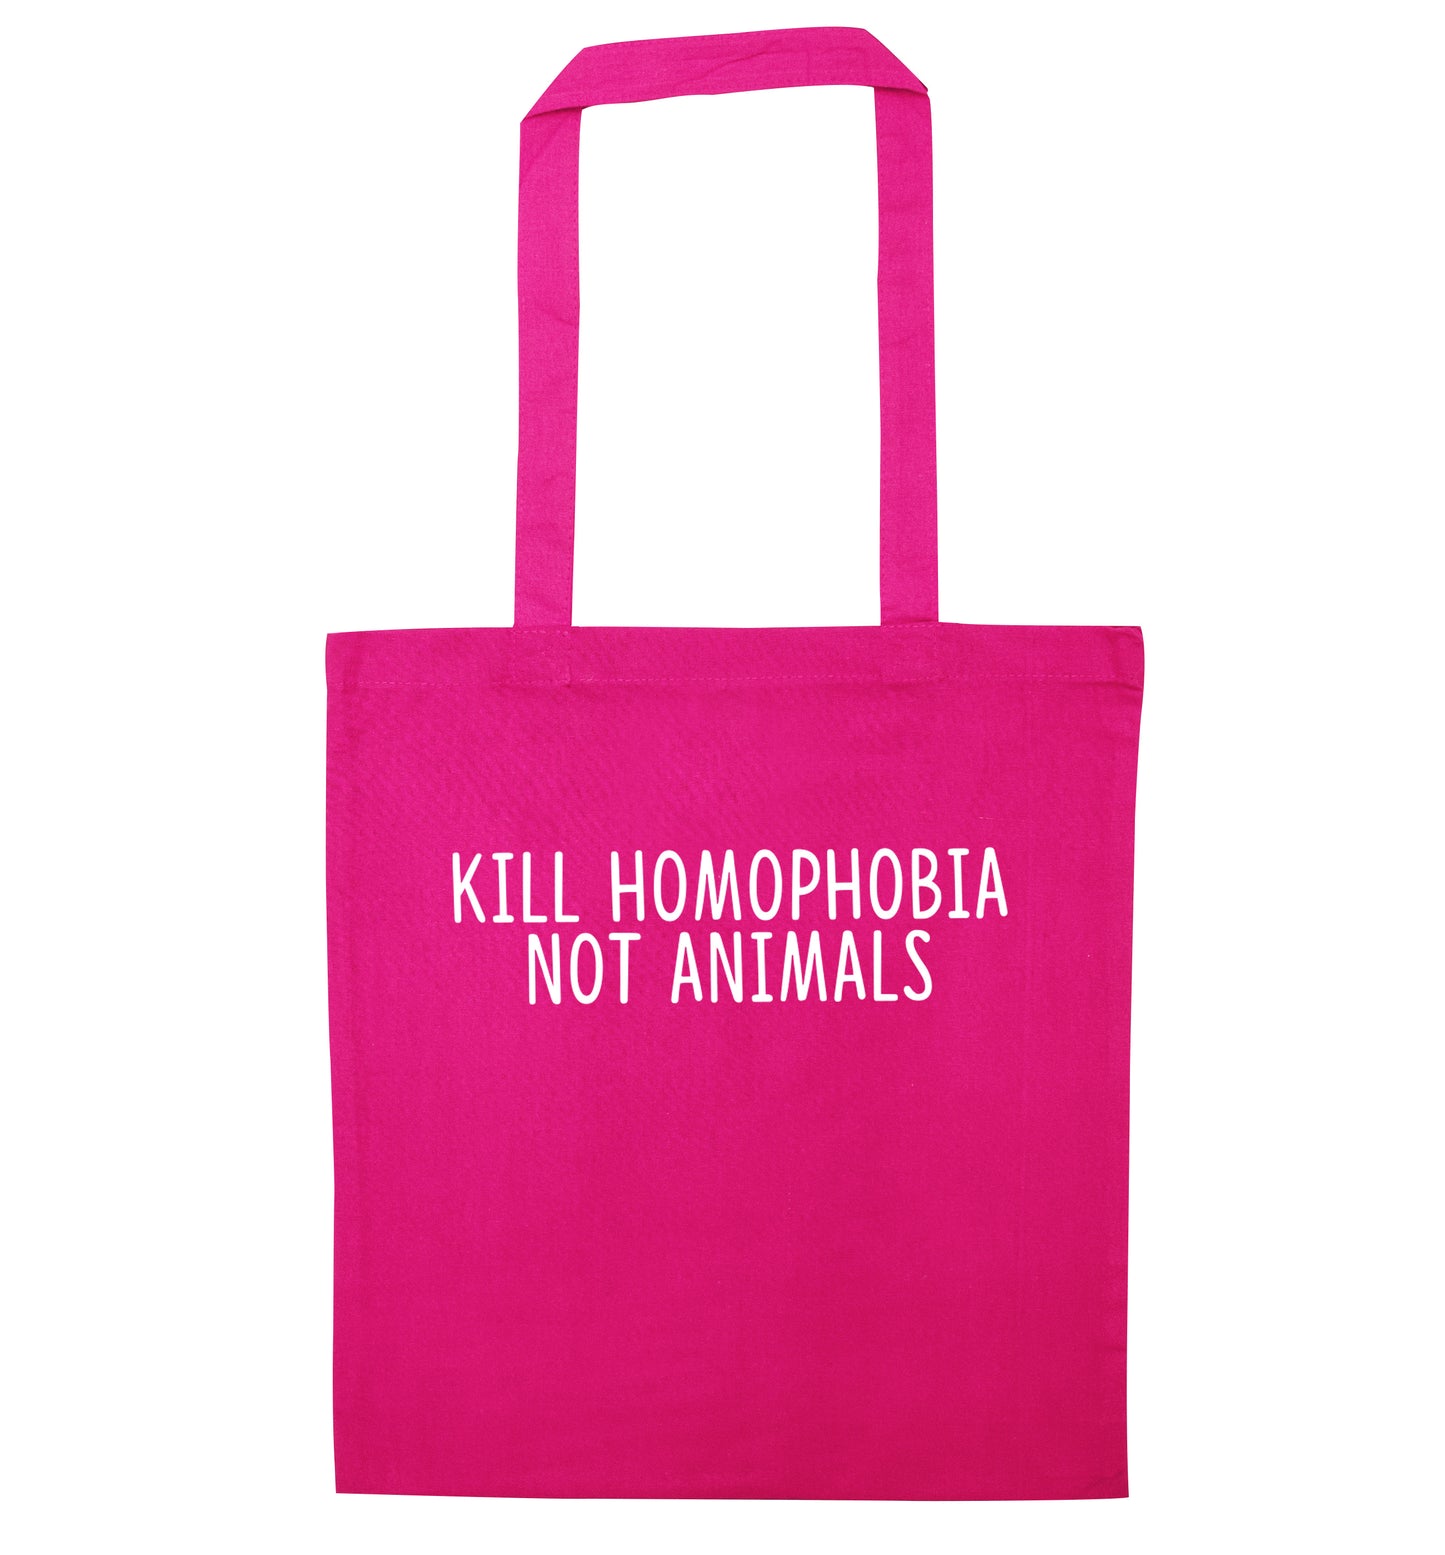 Kill Homophobia Not Animals pink tote bag